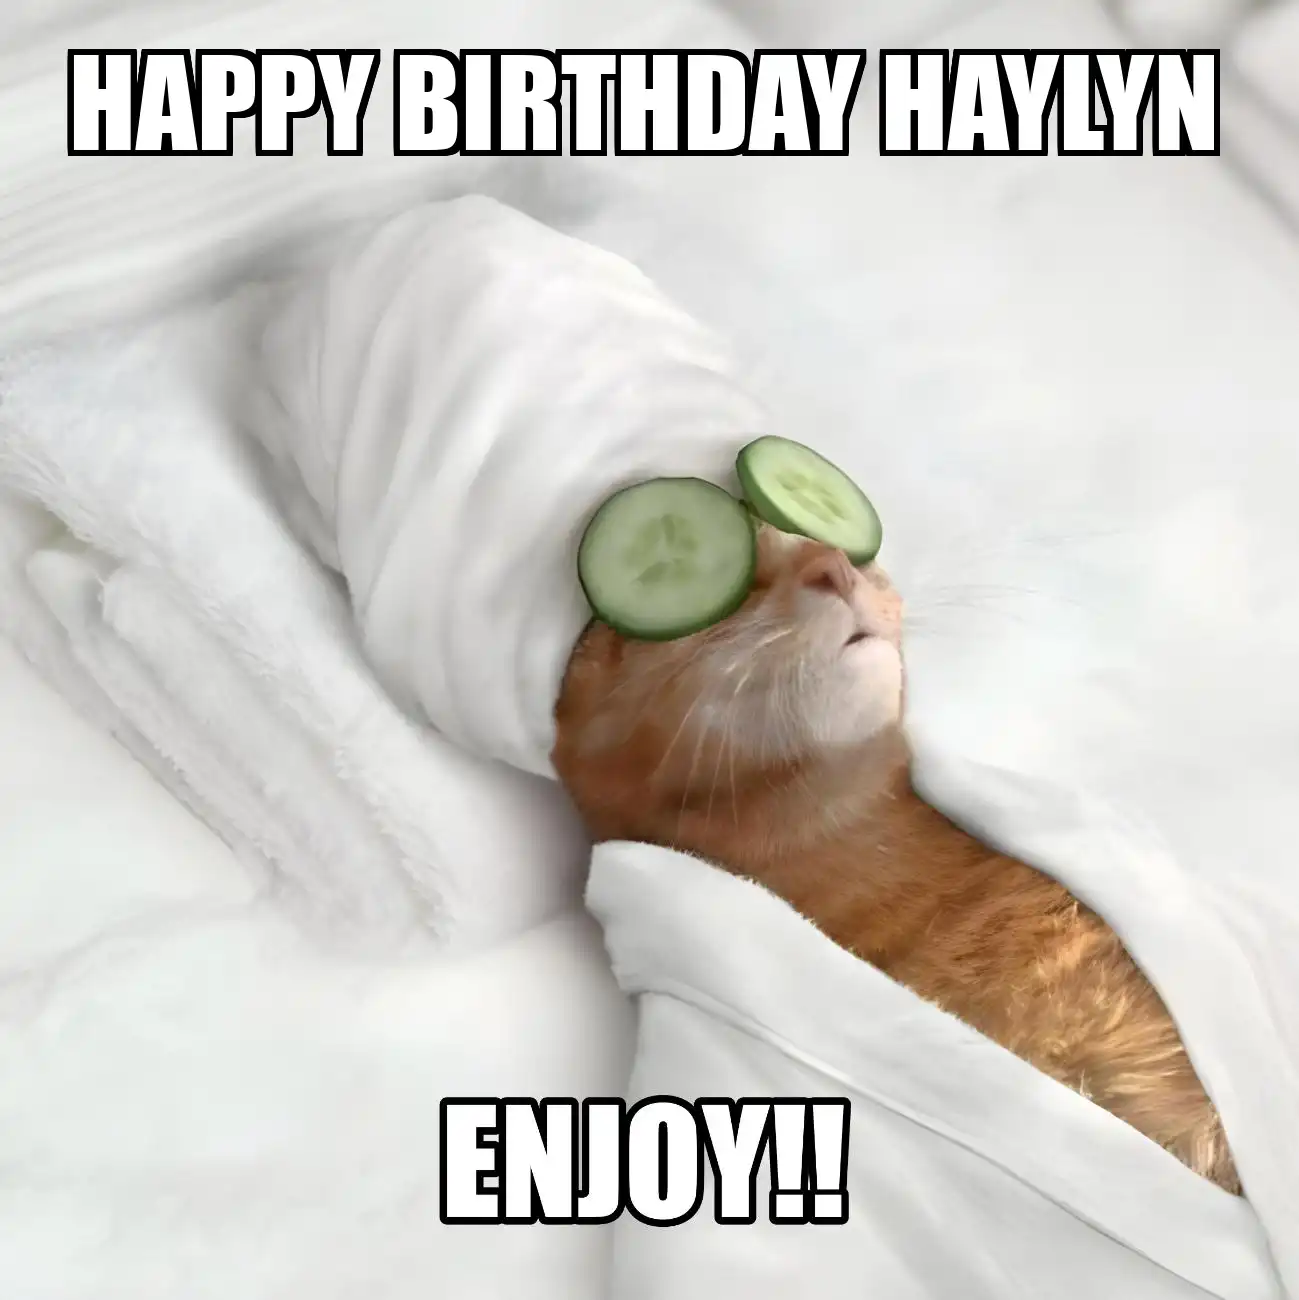 Happy Birthday Haylyn Enjoy Cat Meme